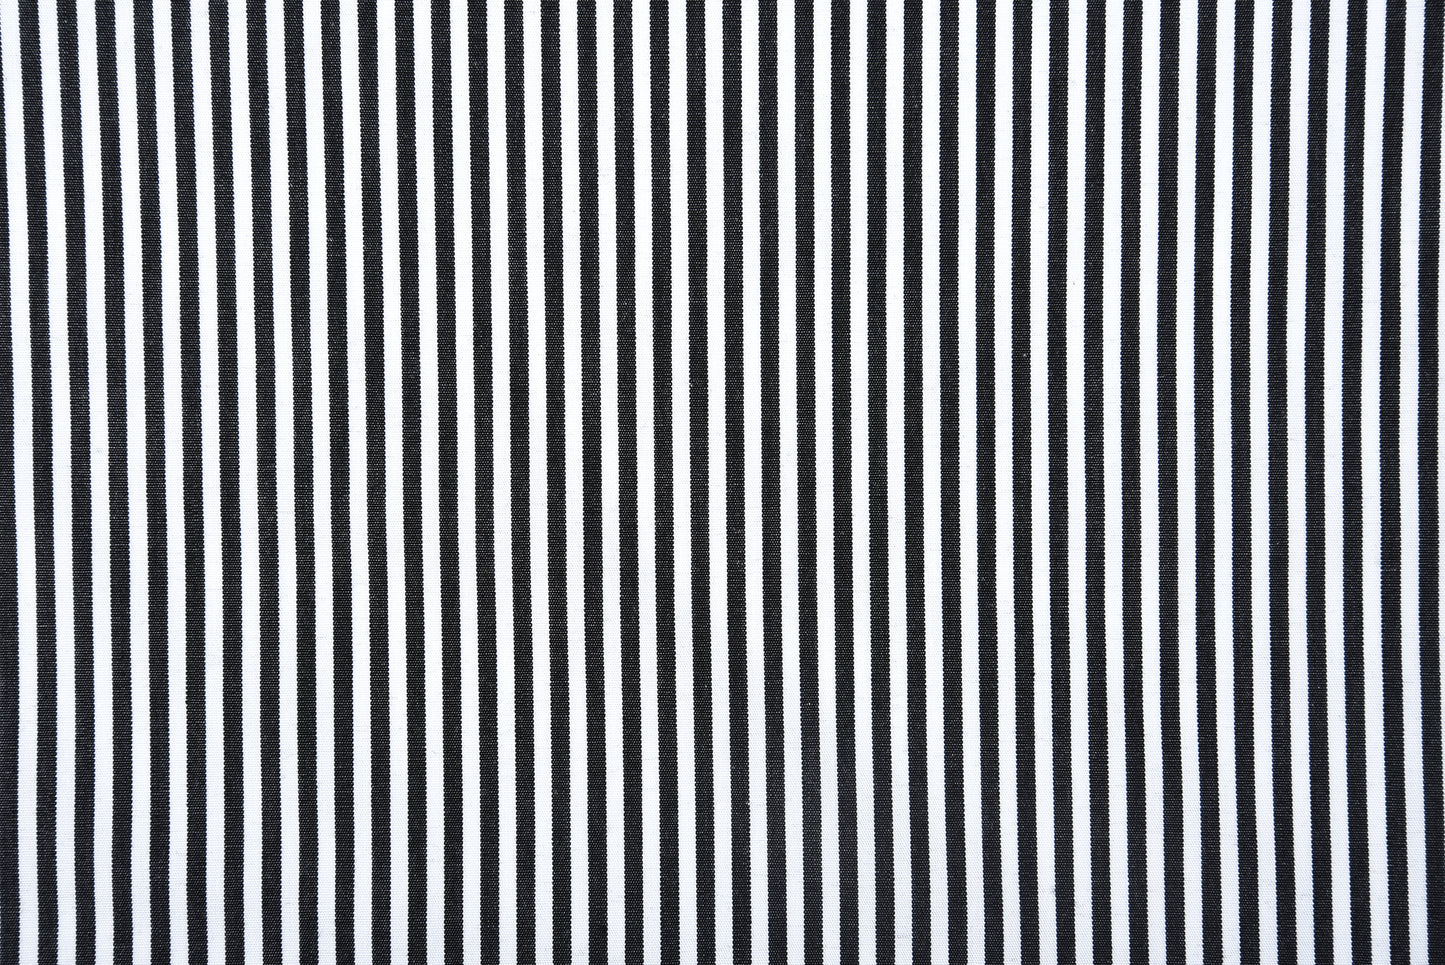 Dark Black Pencil Stripes On White